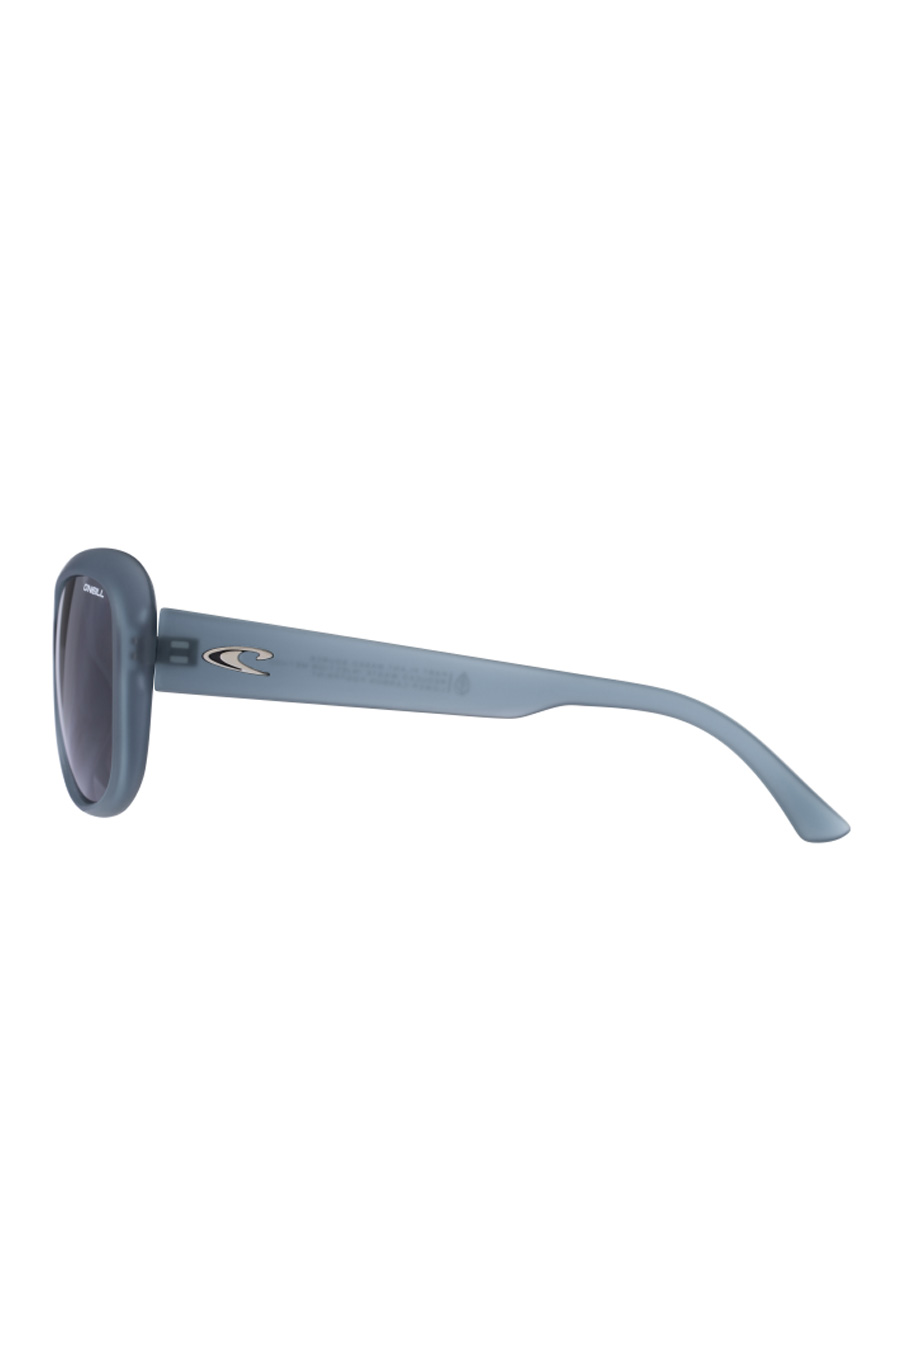 Sunglasses ONEILL ONS-9010-20-105P